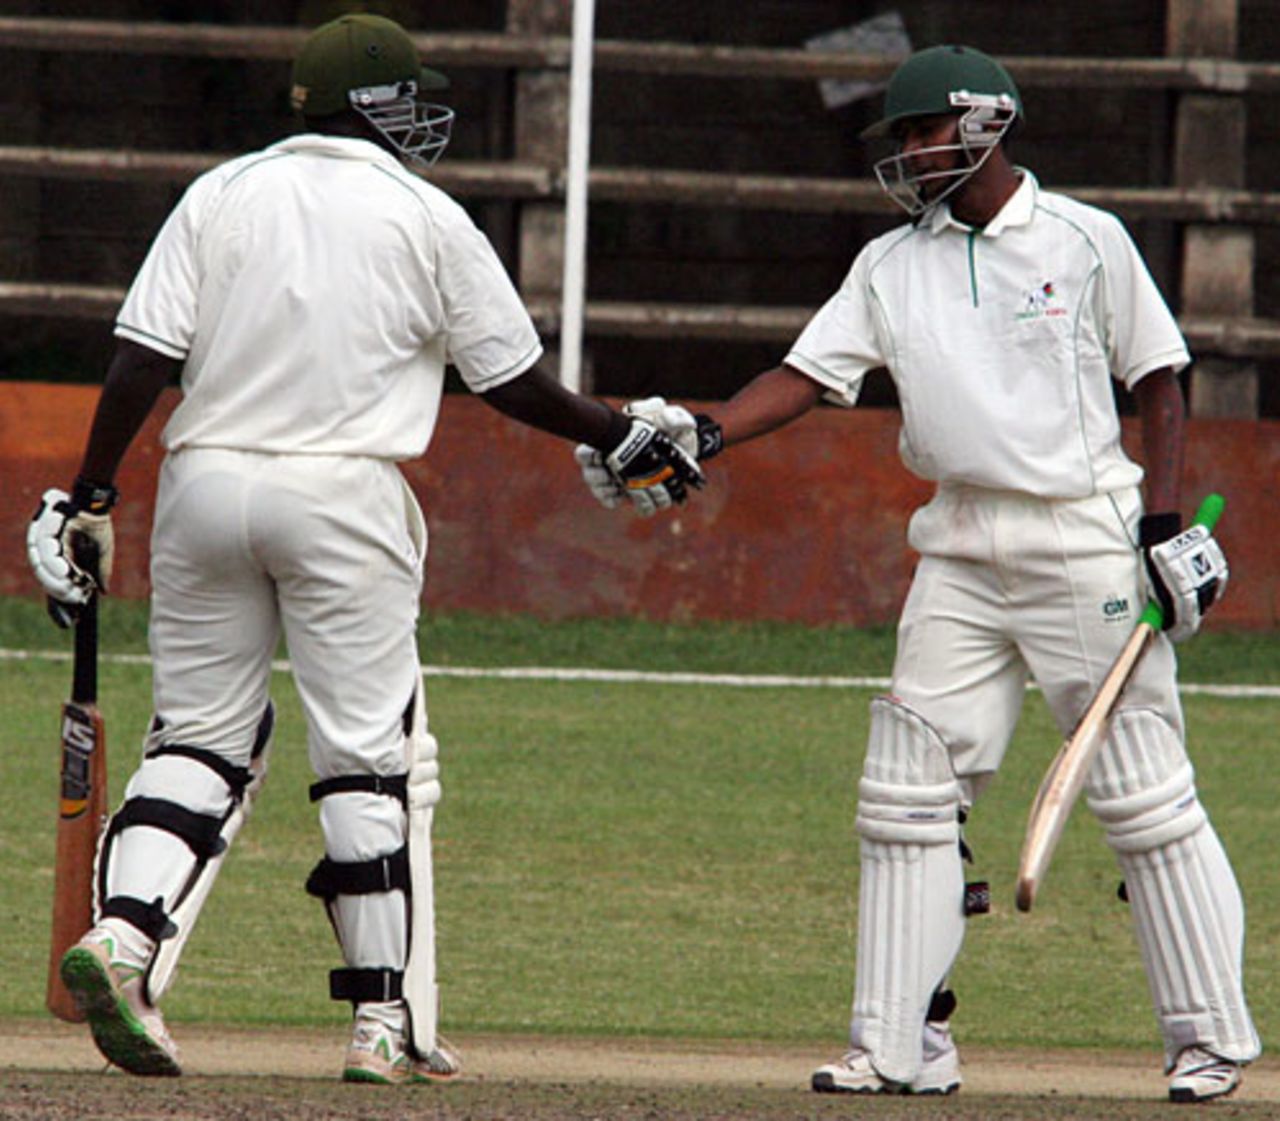 David Obuya and Rakep Patel's 113 runs partnership for 1st wicket laid the foundations for Kenya's victory, Kenya v Netherlands, Intercontinental Cup, Nairobi, February 23, 2010